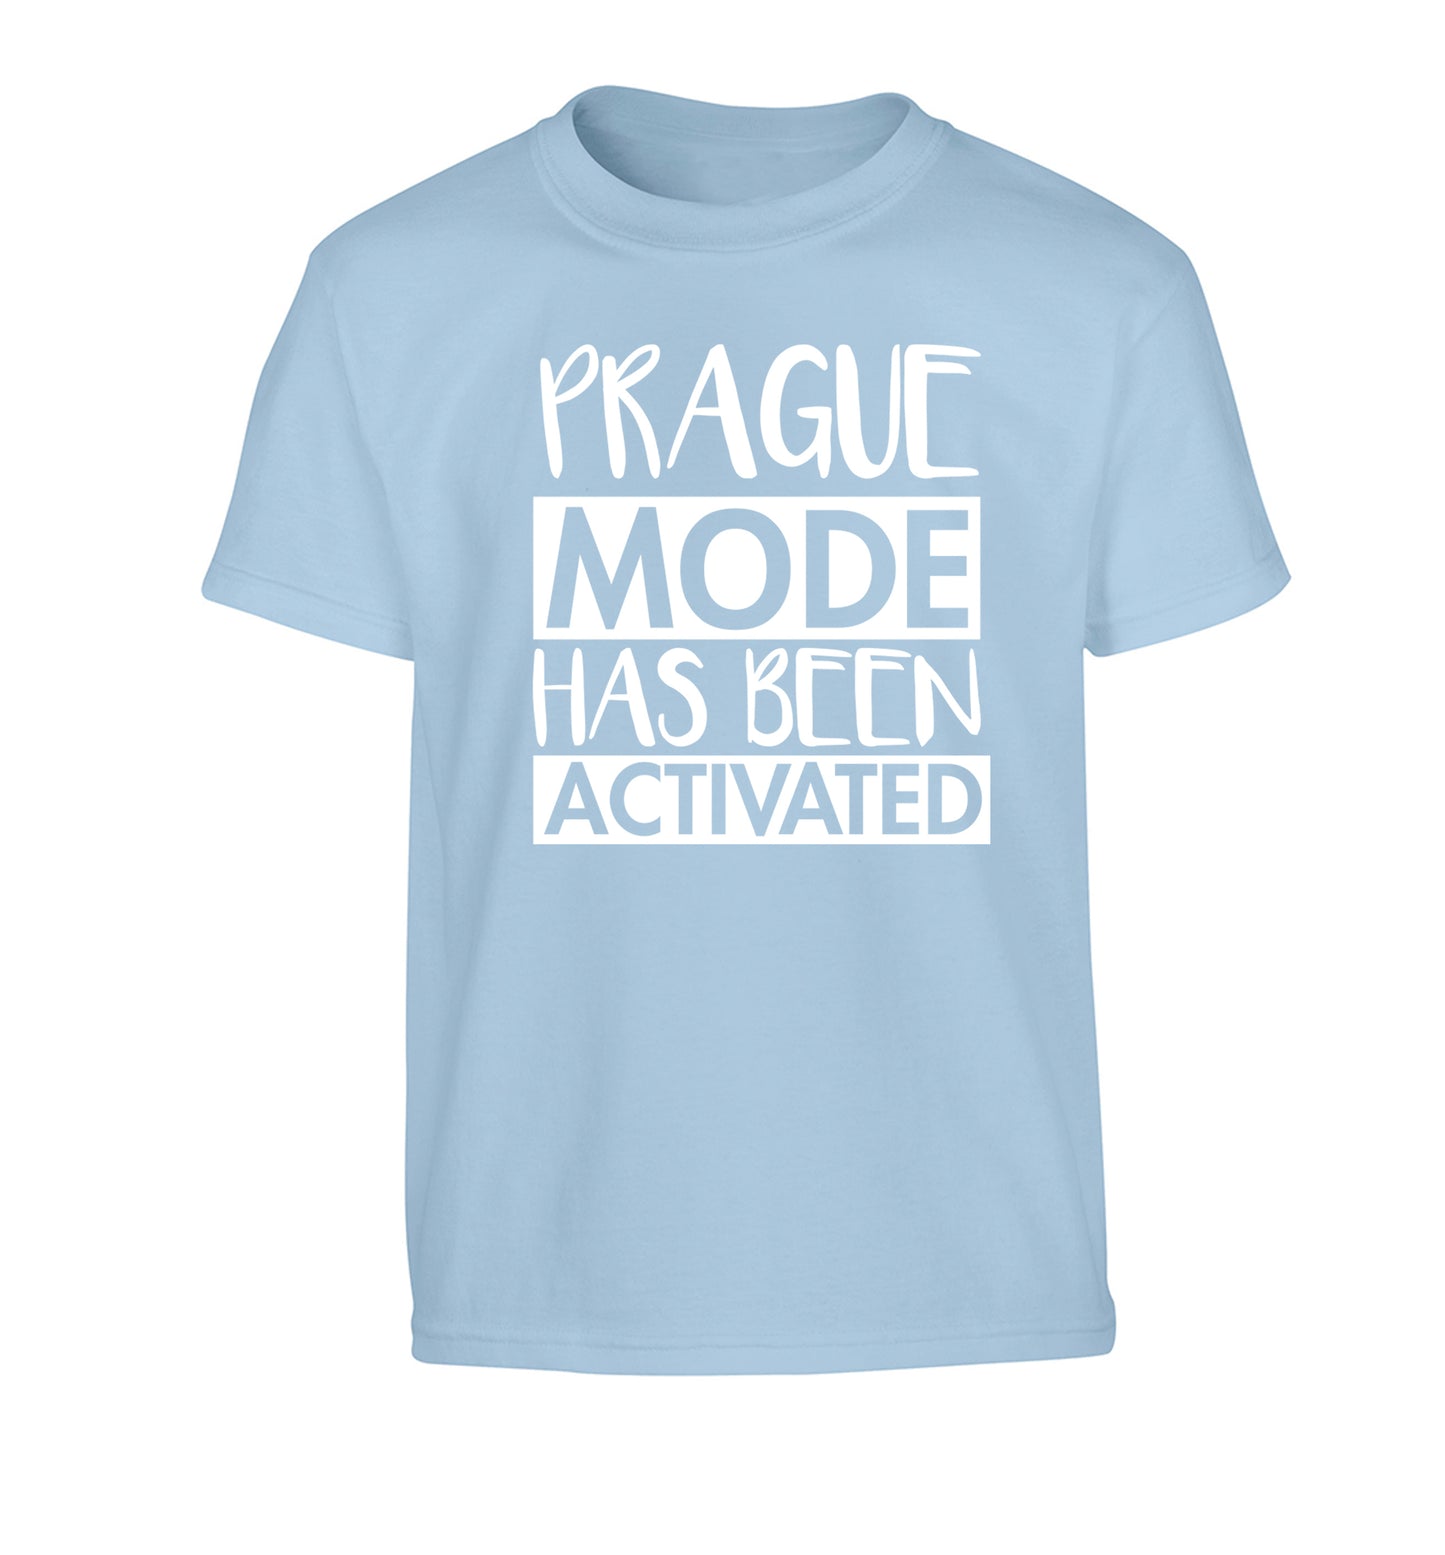 Prague mode has been activated Children's light blue Tshirt 12-13 Years